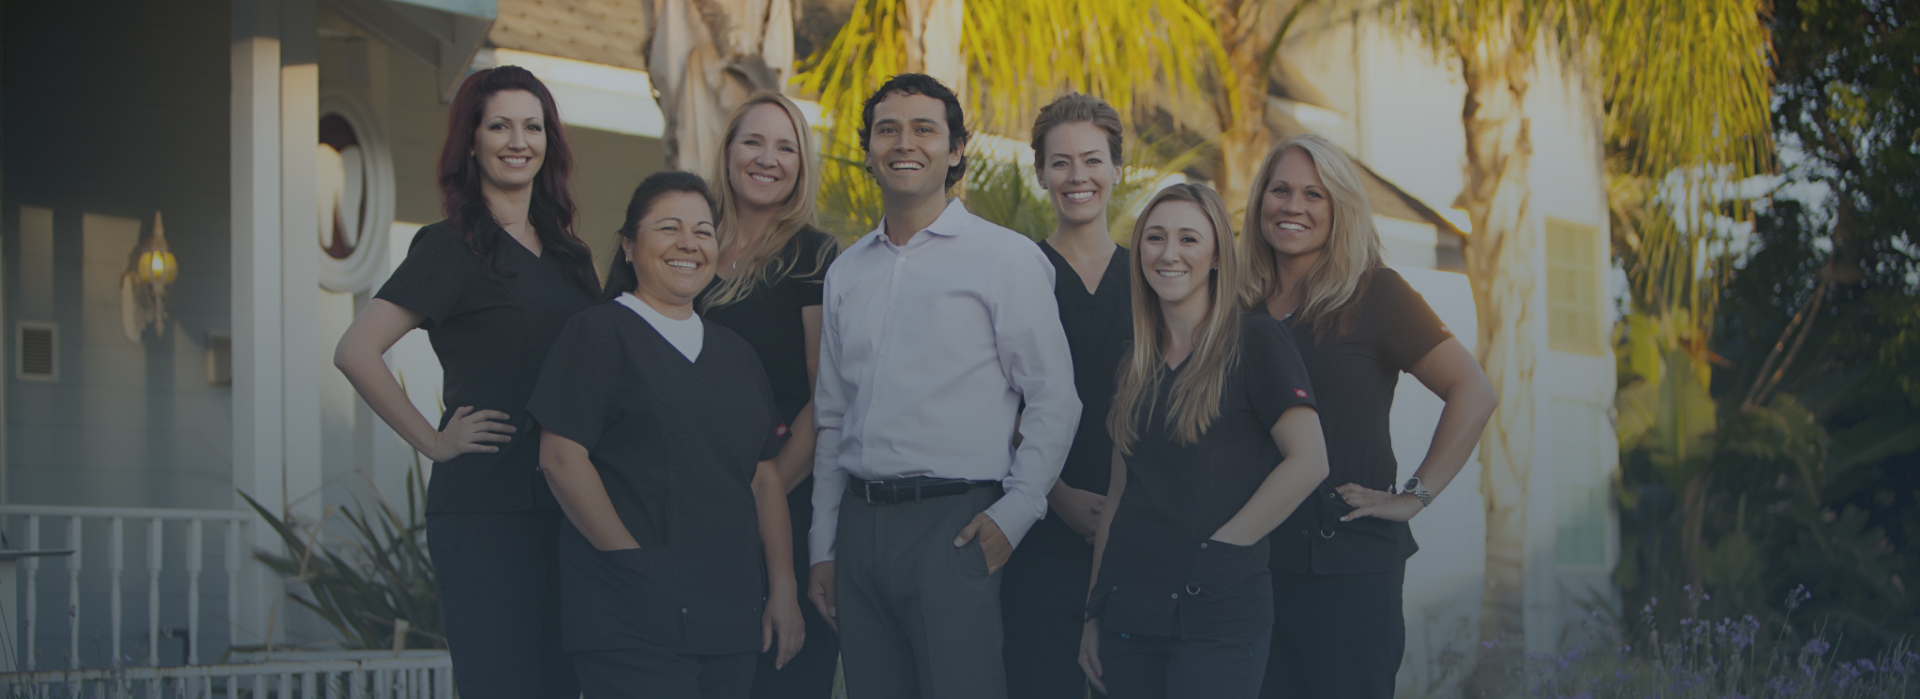 Wide photo of Larrondo Family Dentistry team